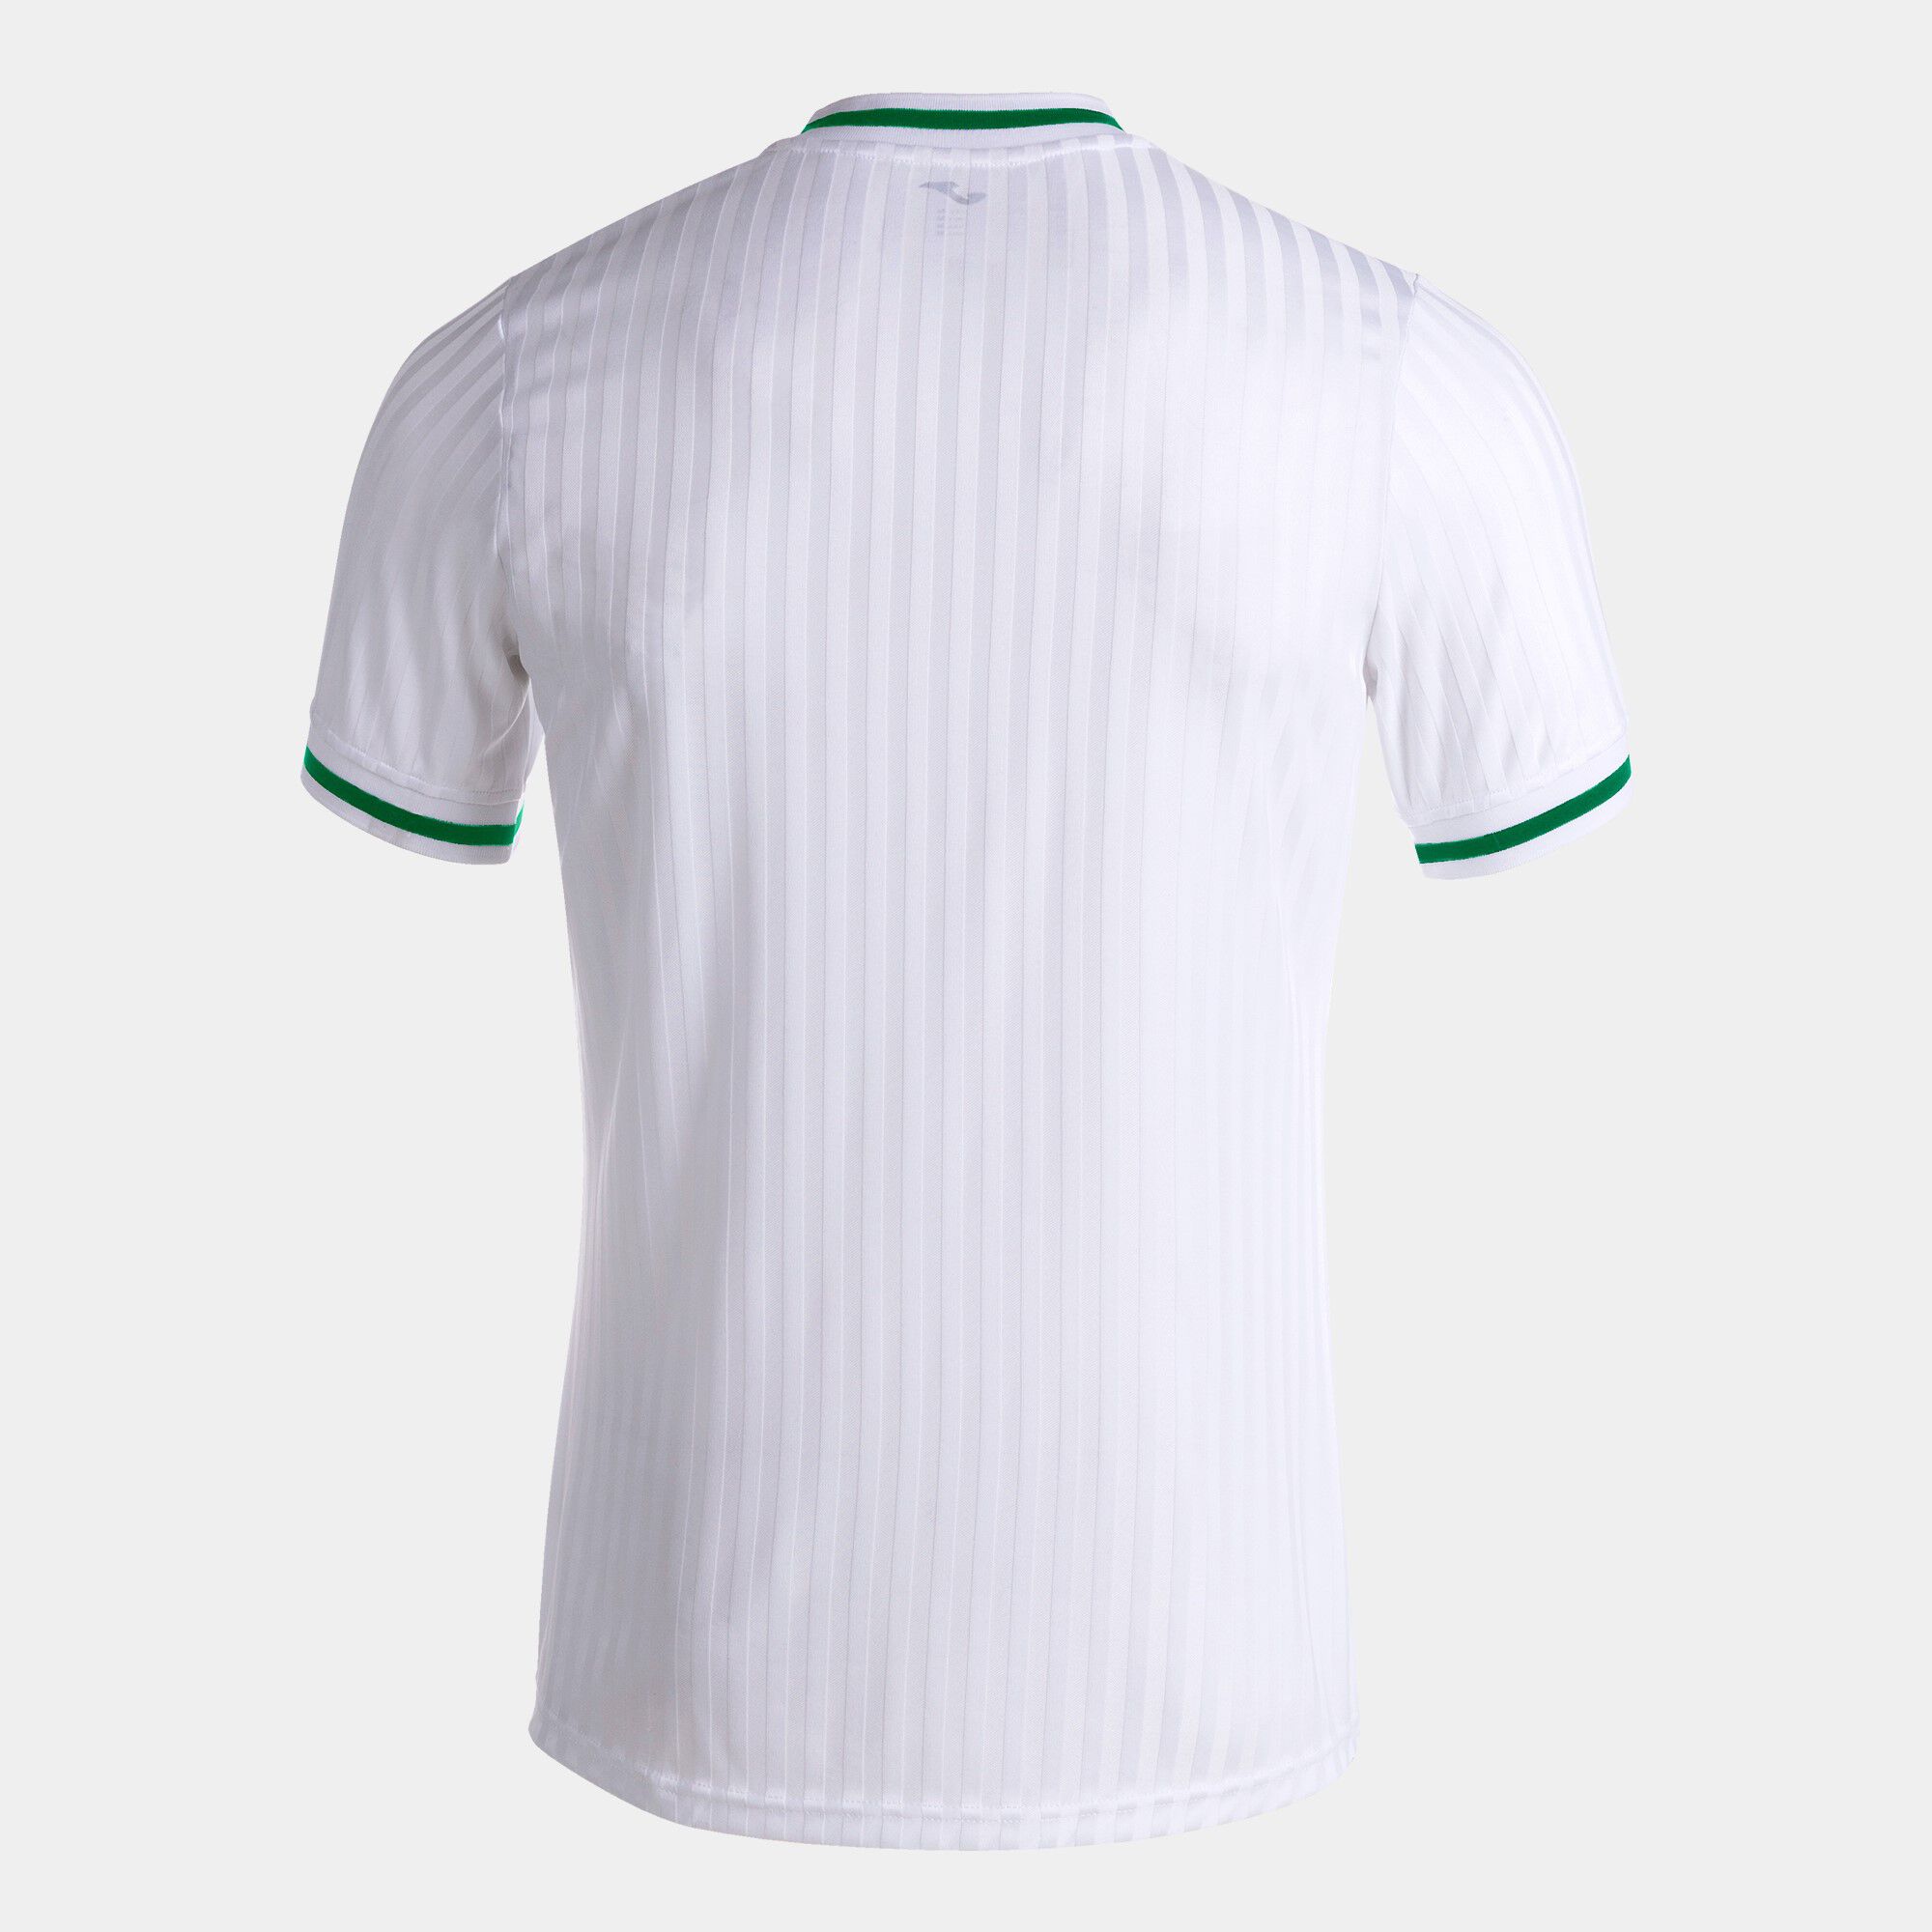 T-shirt manga curta homem Toletum III branco verde